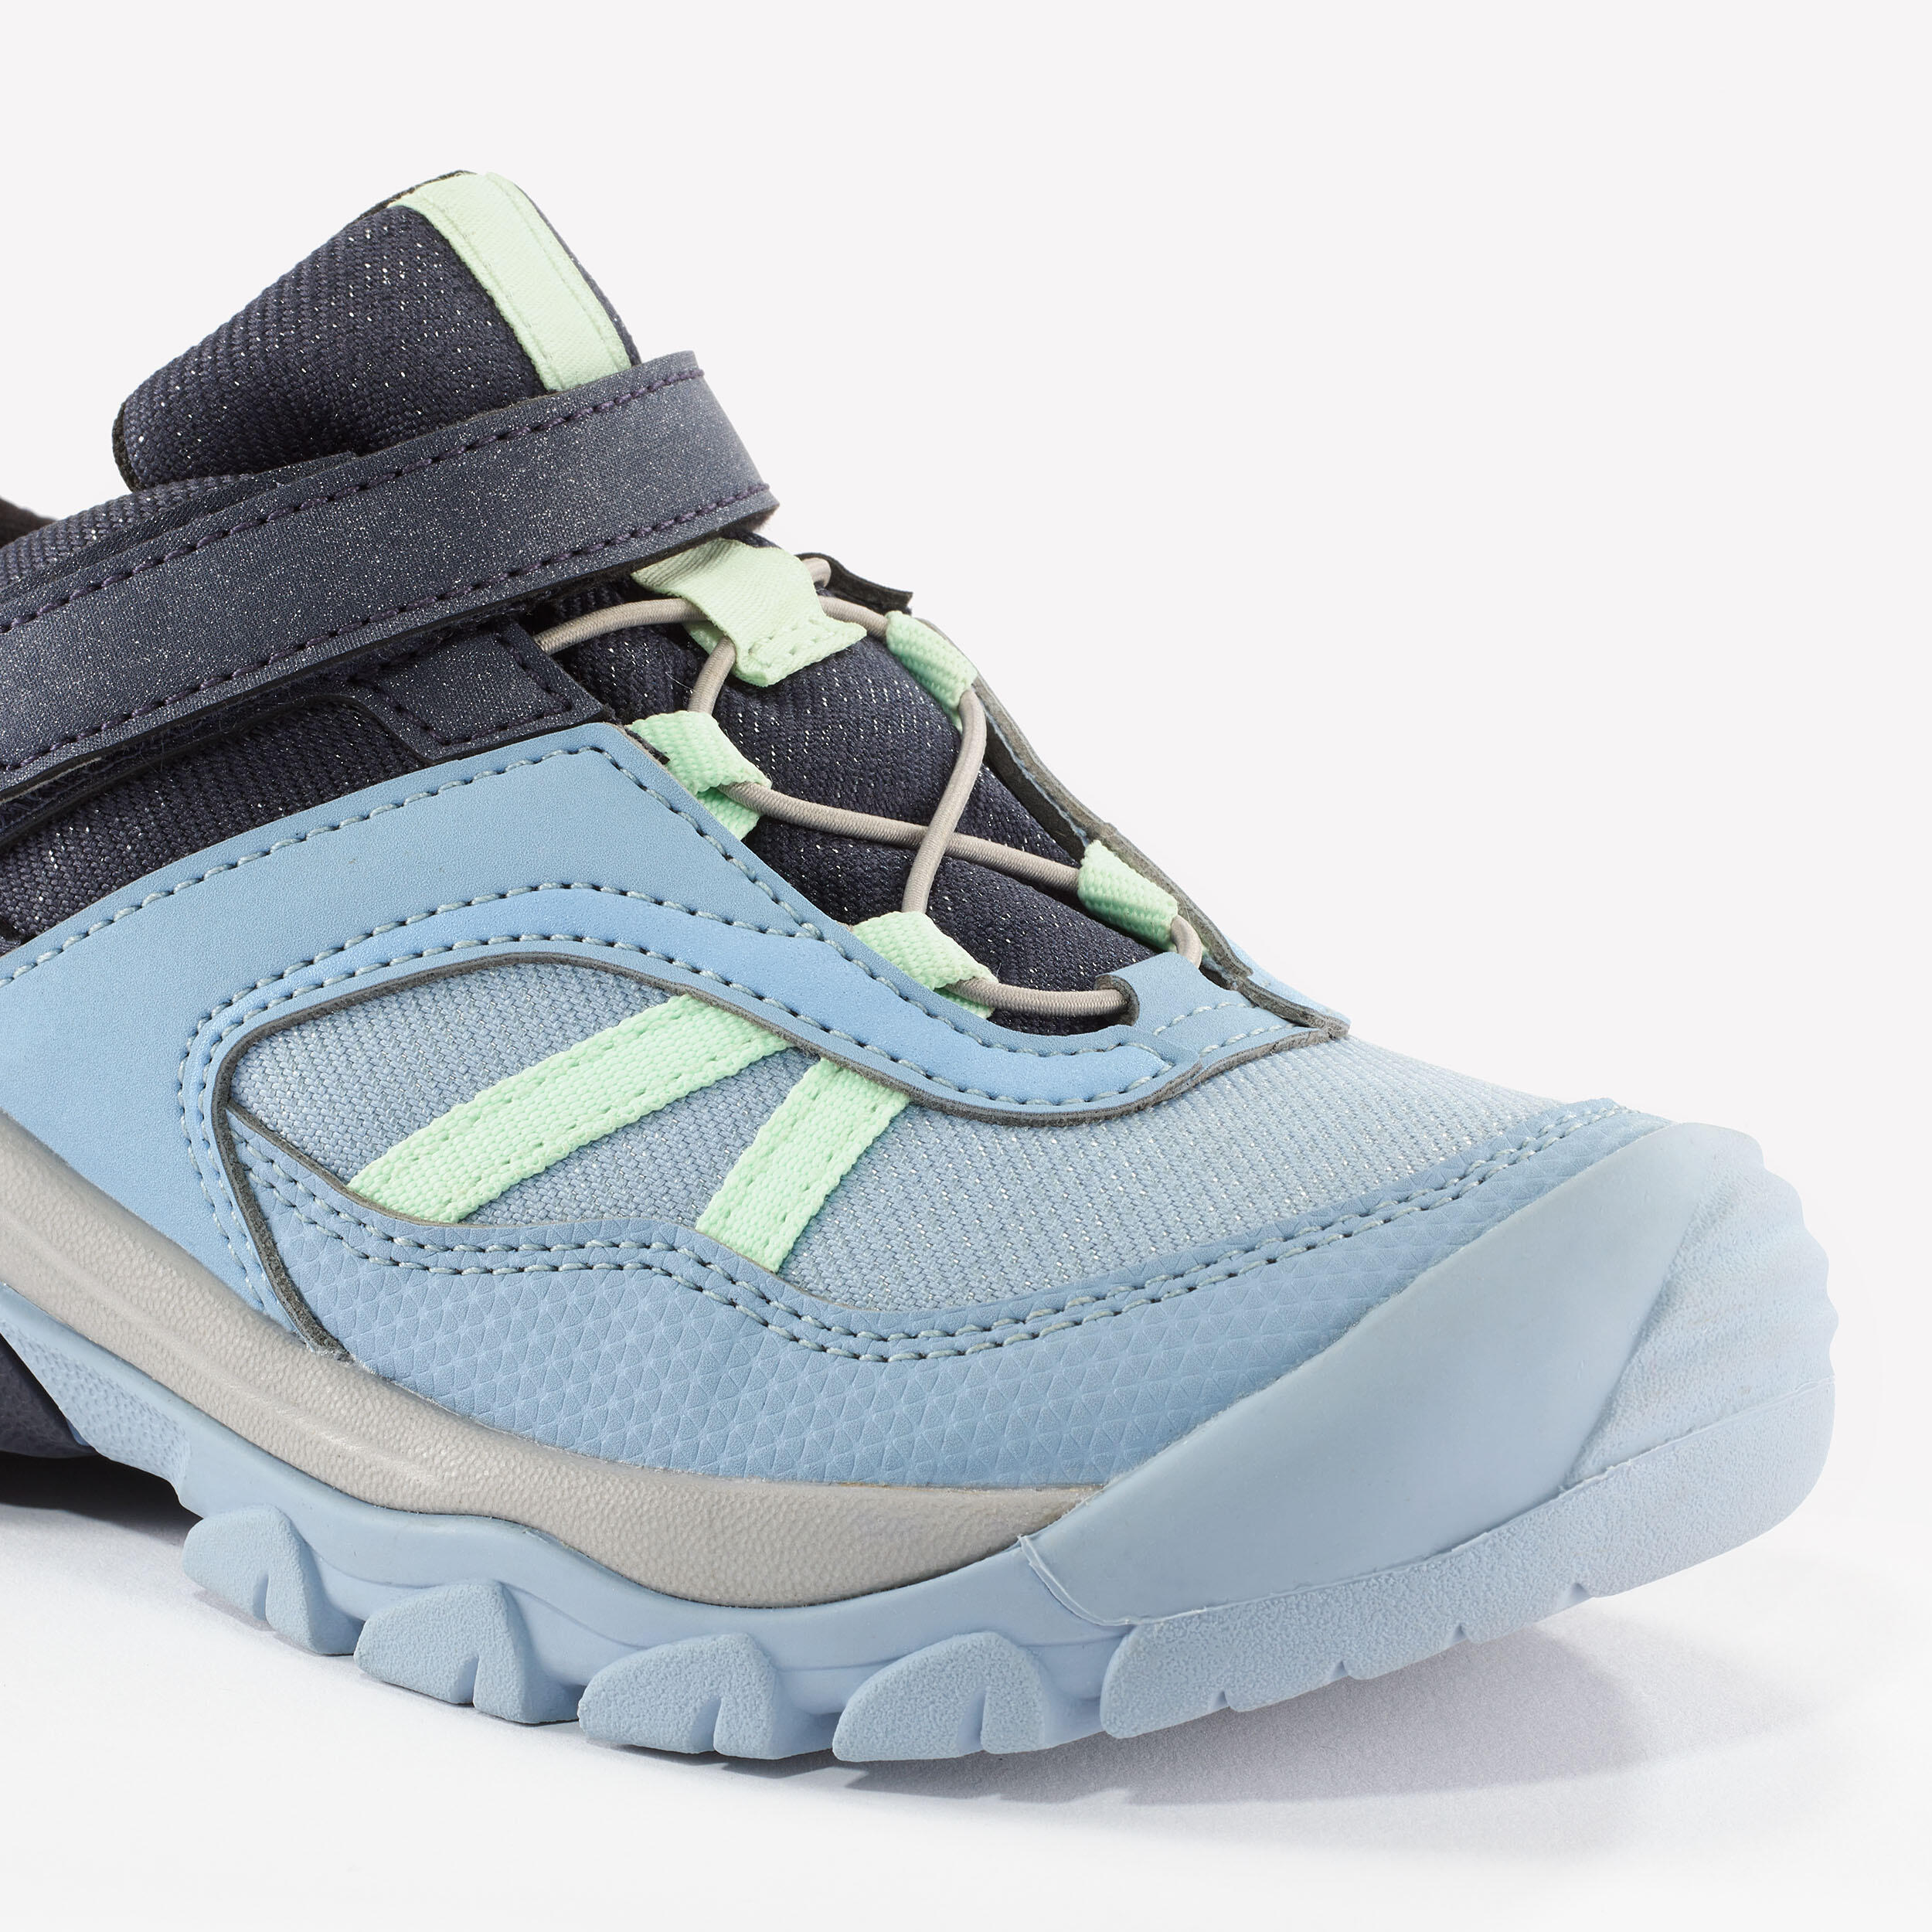 Children's Waterproof Hiking Boots - CROSSROCK light blue - 28–34 9/10